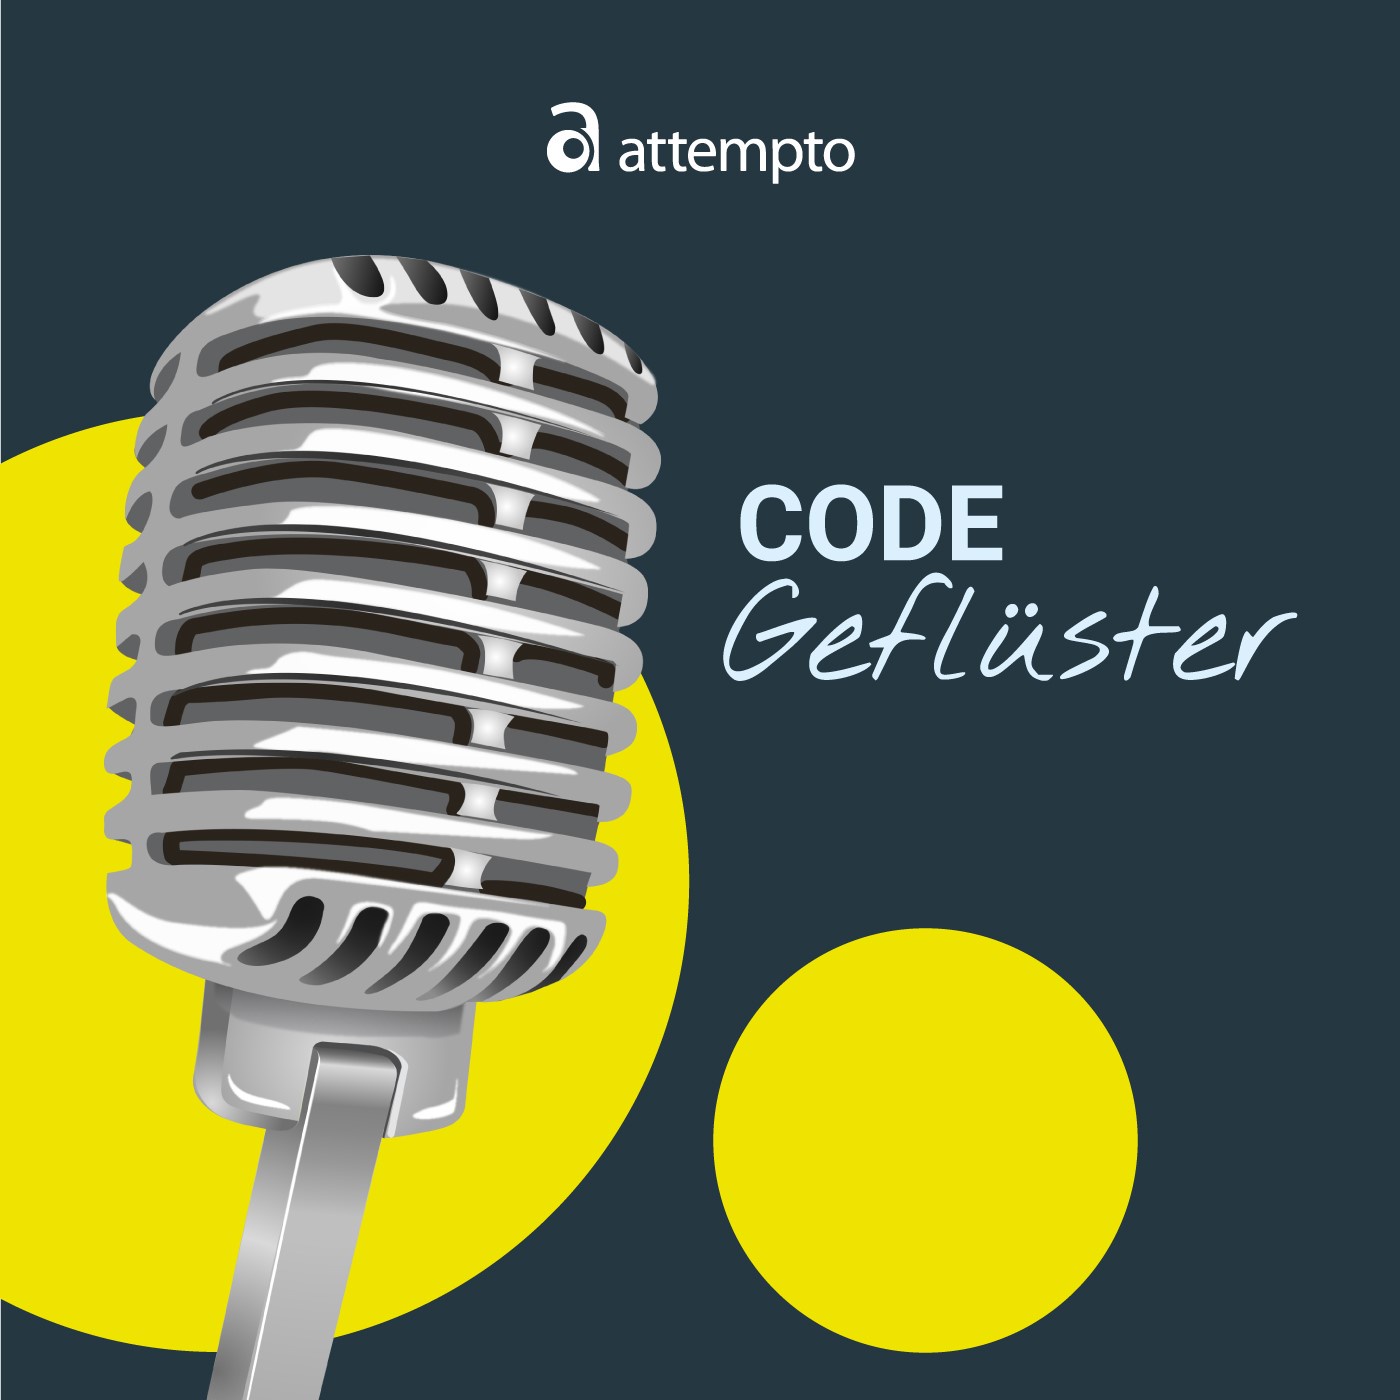 Codegeflüster - der attempto Podcast